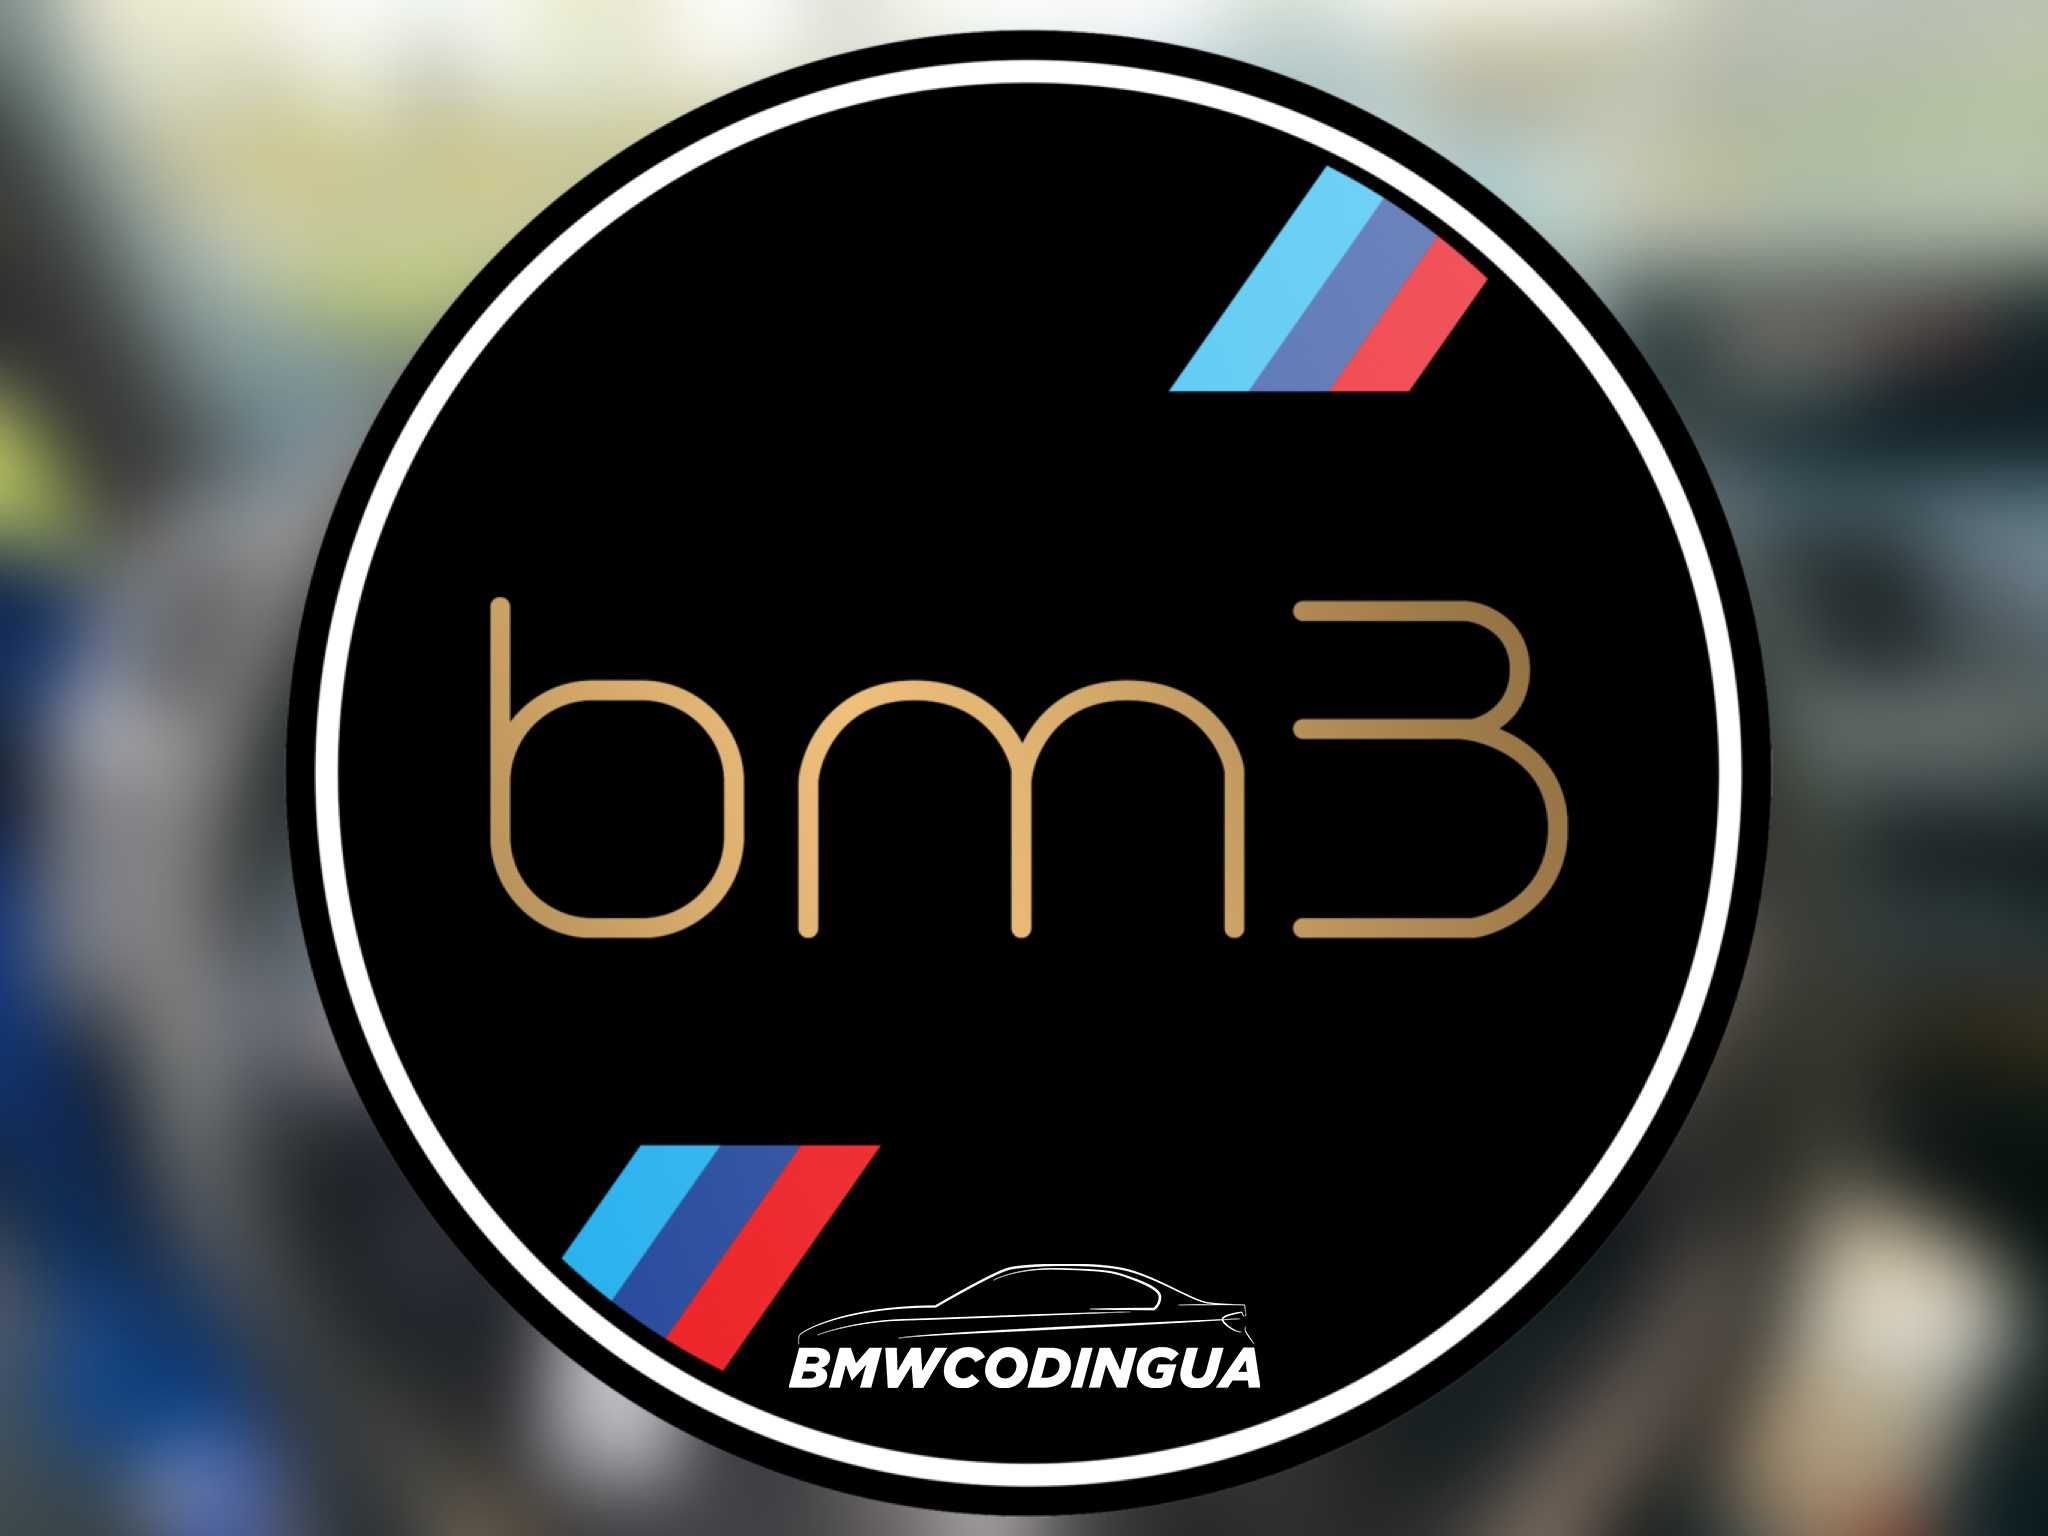 Официальный Bootmod3 BMW Stage/Чип-тюнинг/Прошивка/Попкорн/Евро2/bm3